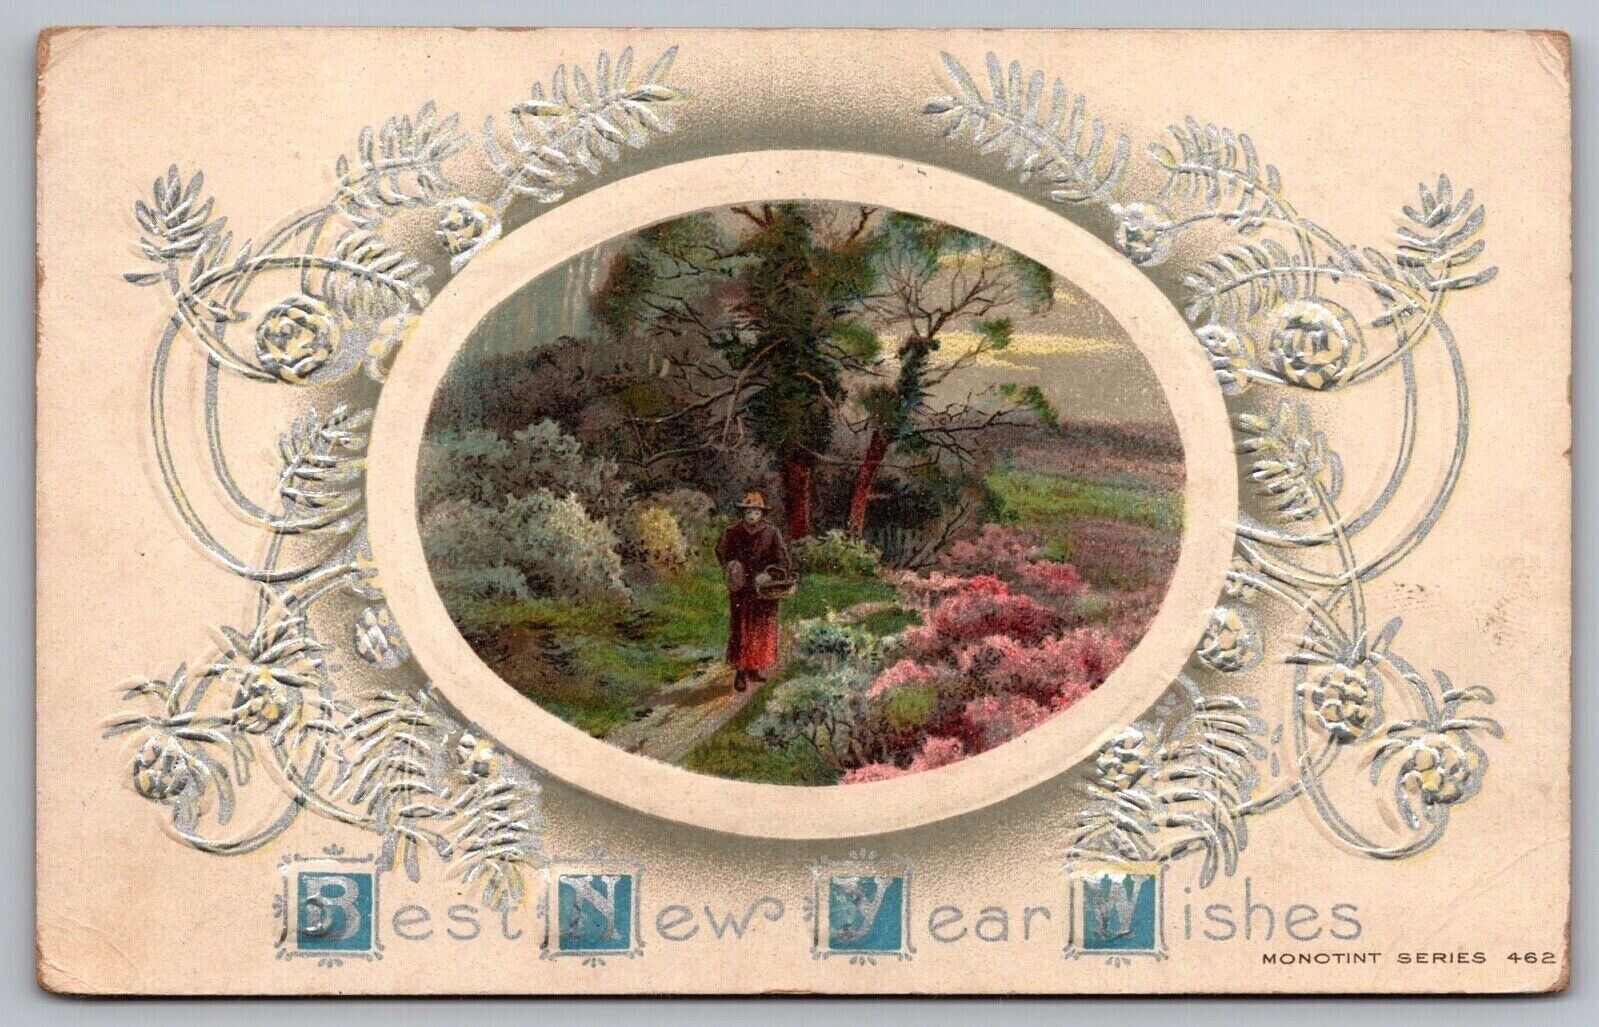 Best New Year Wishes Antique Embellished Postcard PM Newark NJ Cancel WOB Note